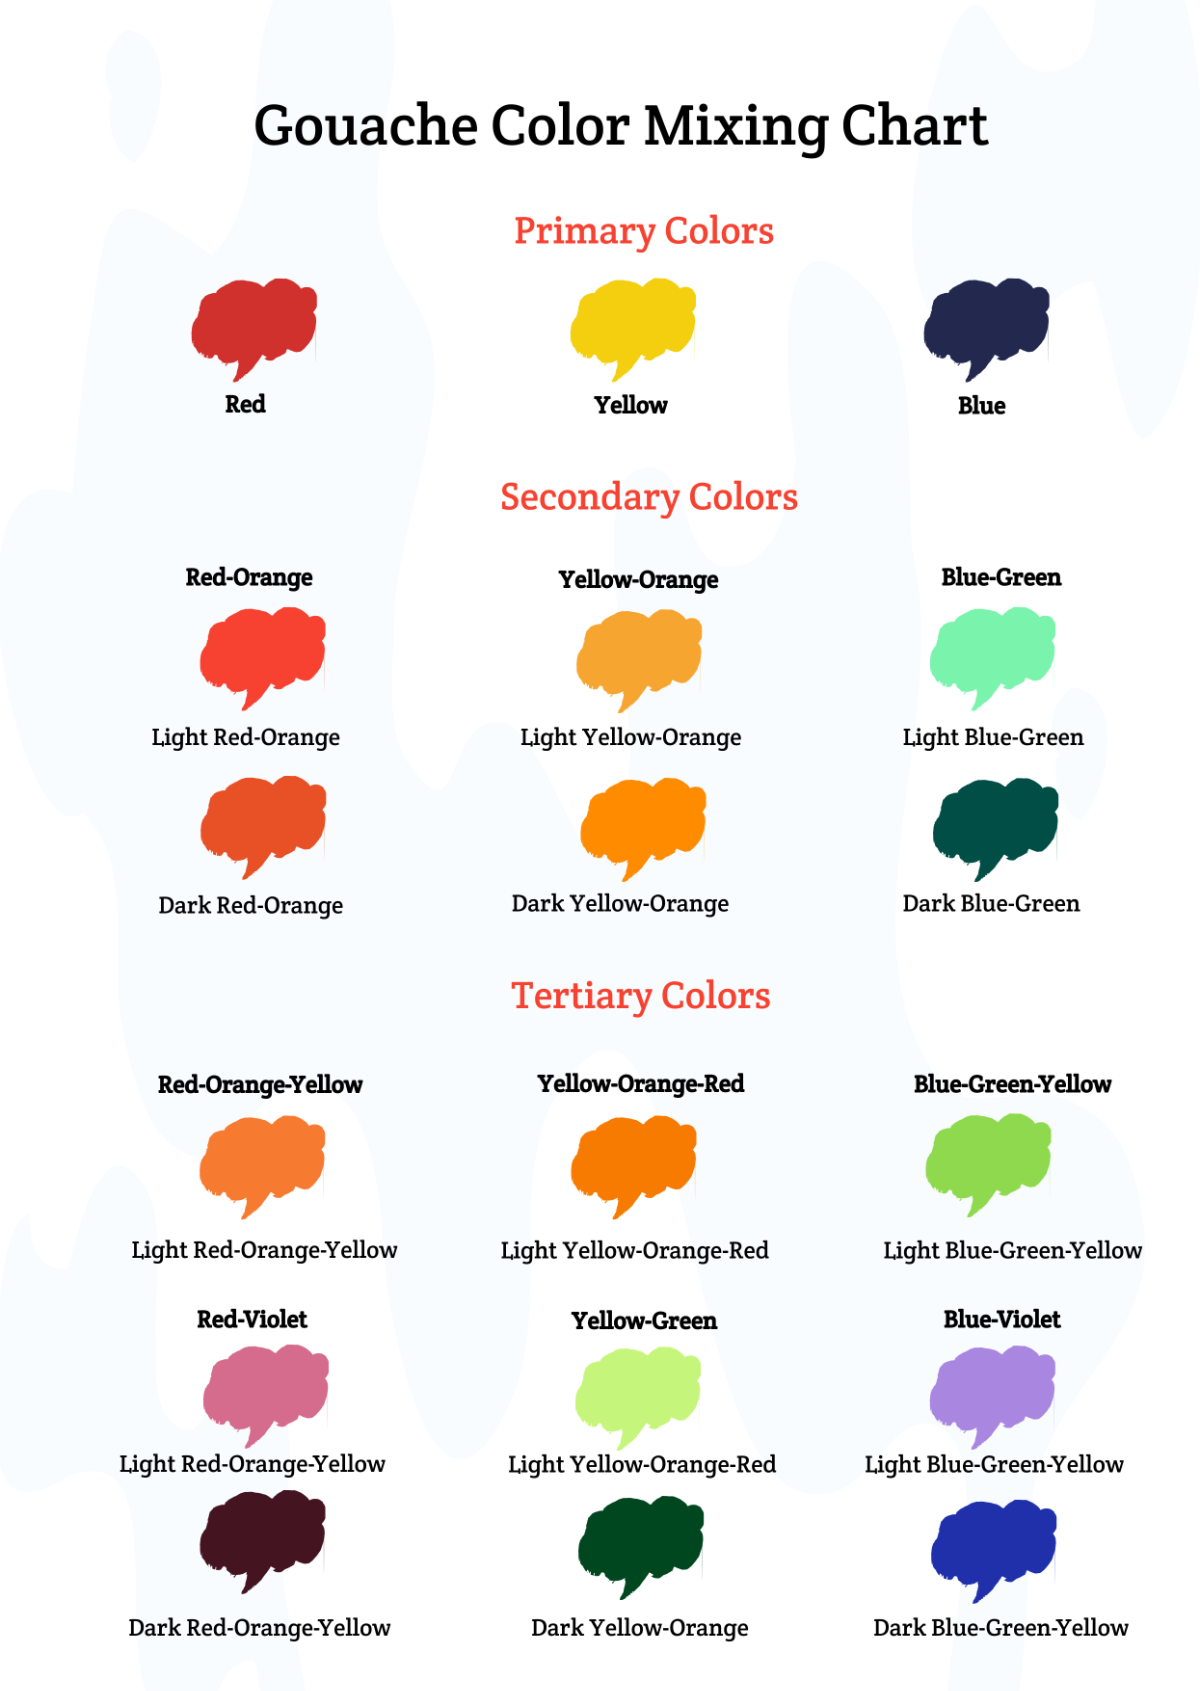 Gouache Color Mixing Chart